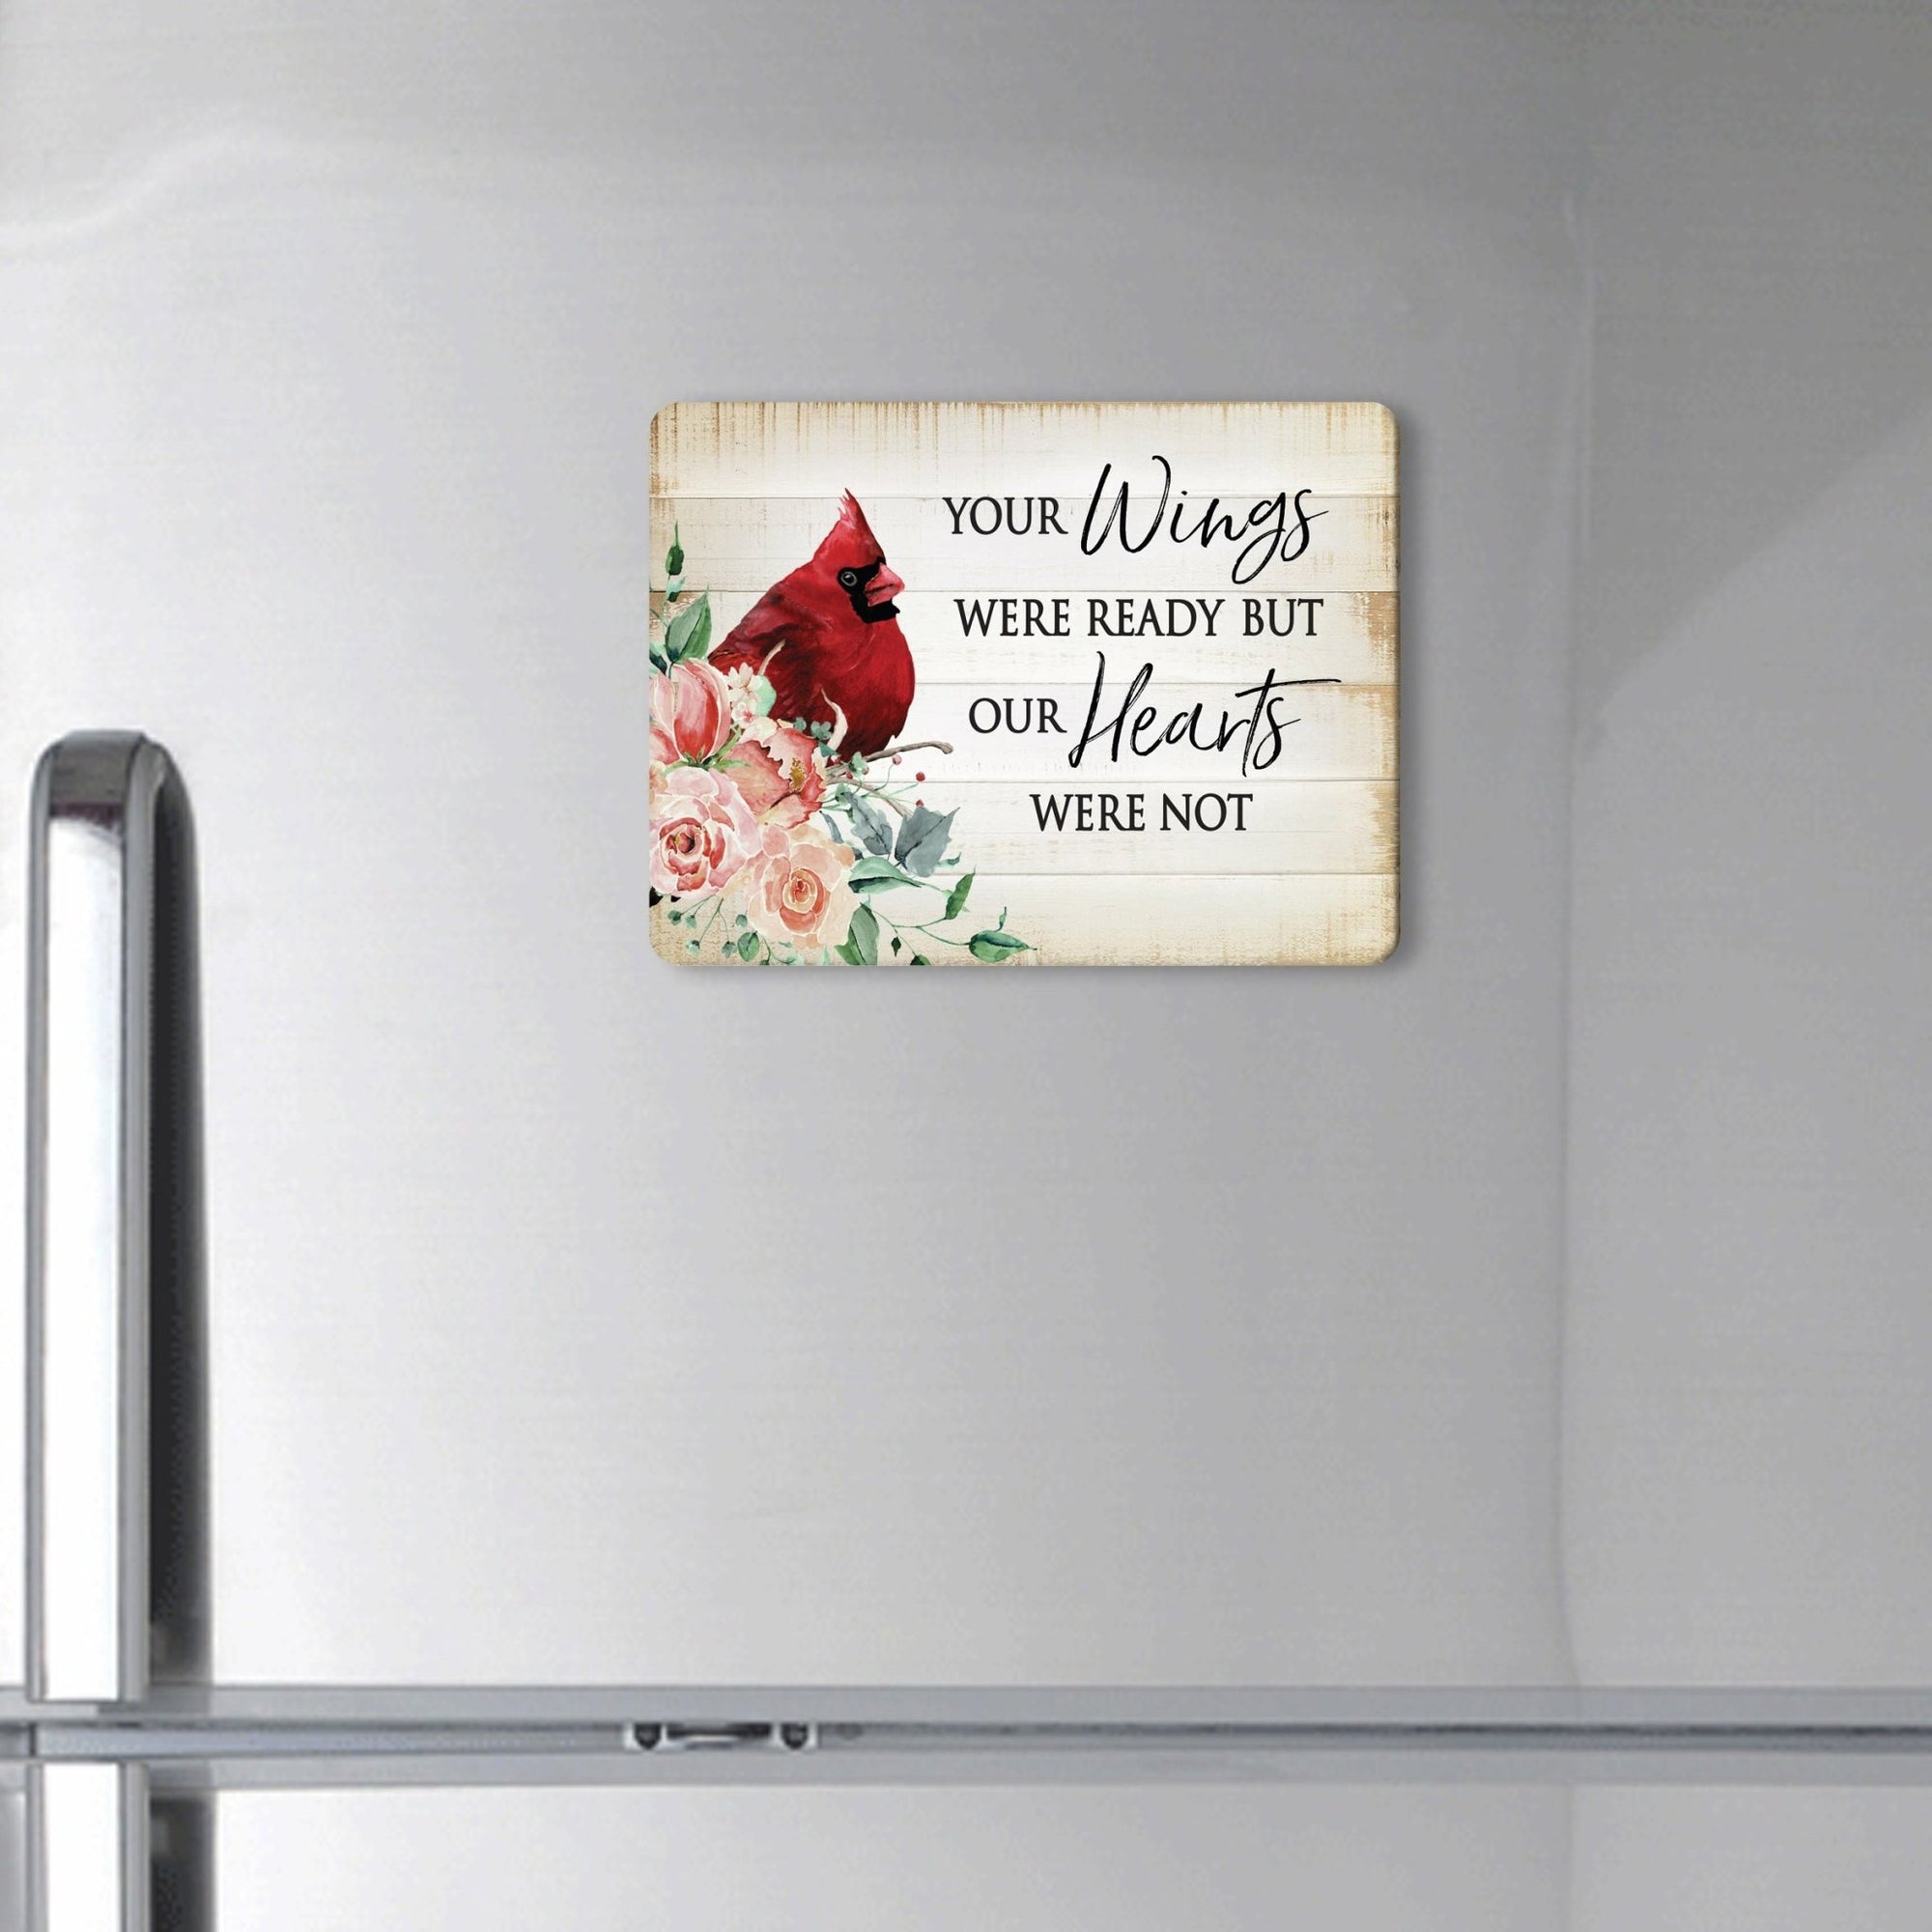 A modern cardinal magnet gracing a refrigerator - a heartfelt memorial home decoration.